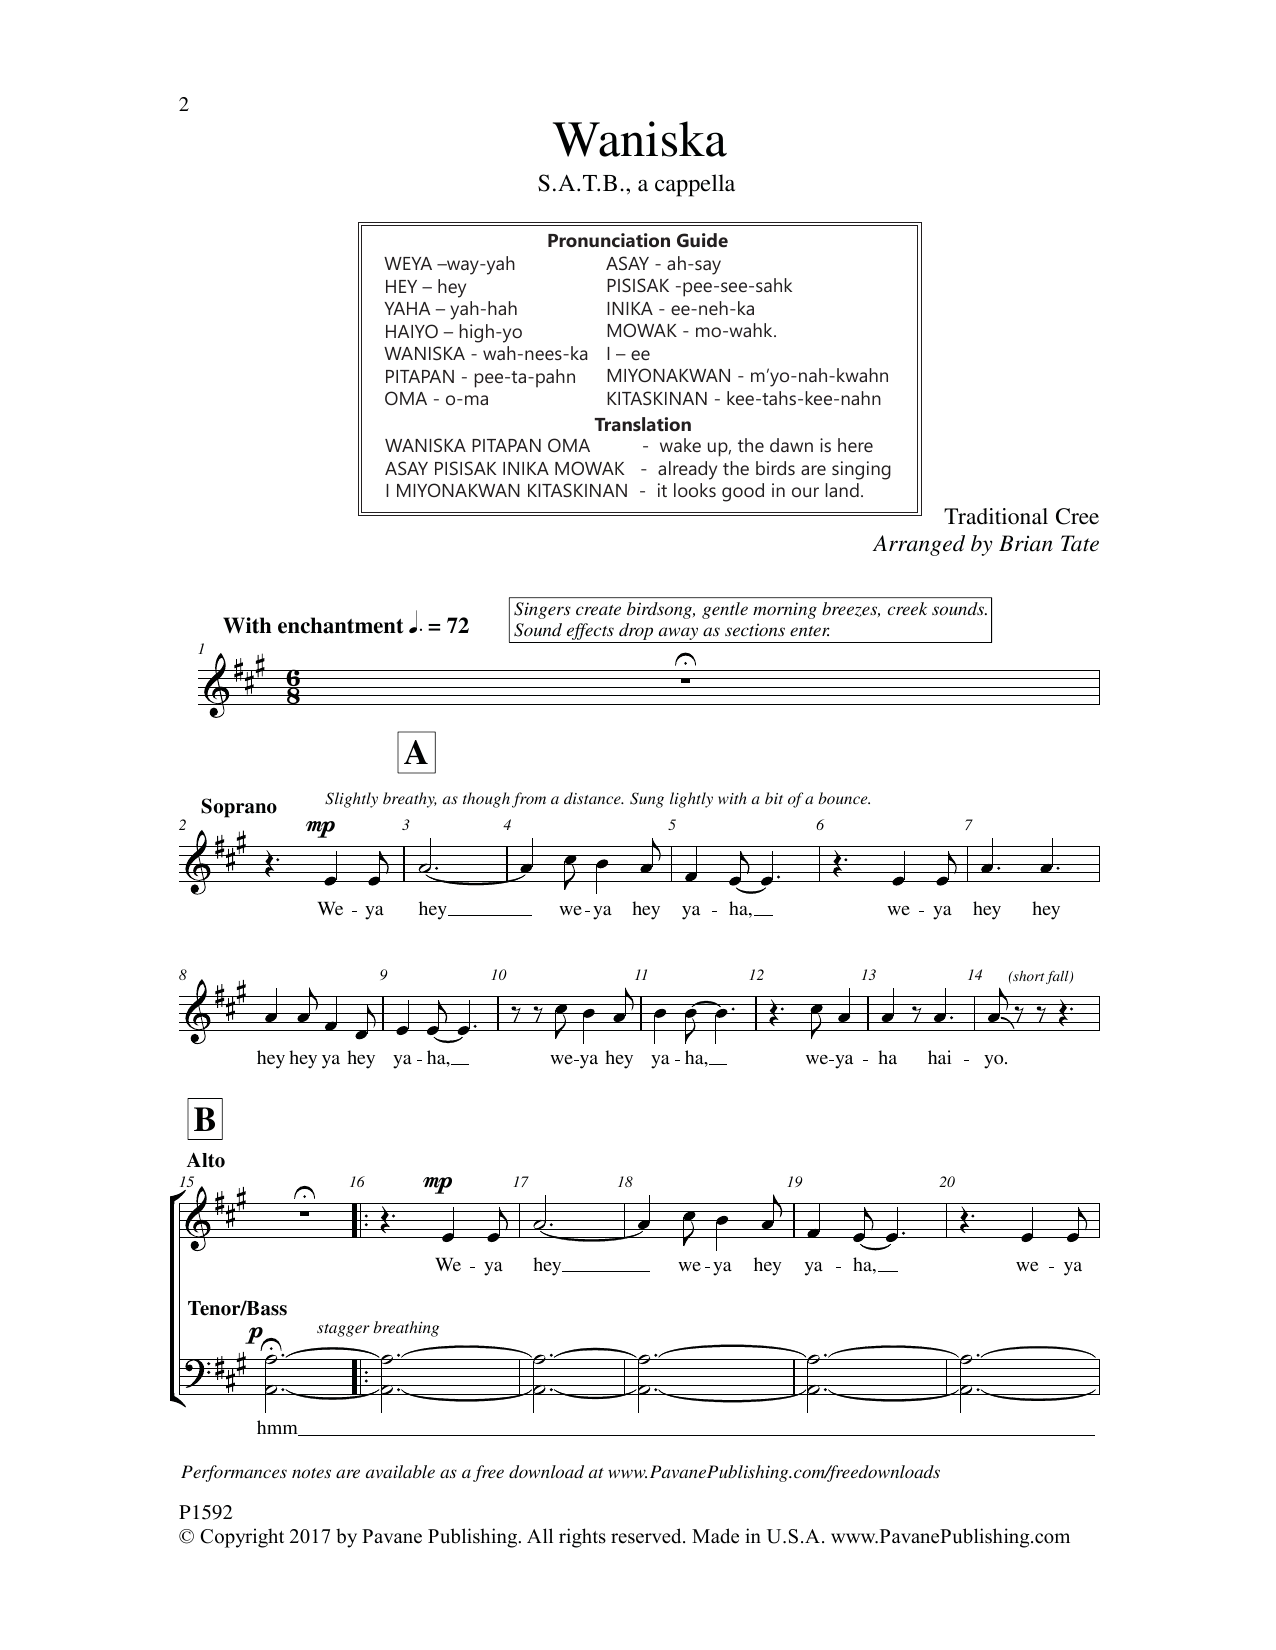 Brian Tate Waniska Sheet Music Notes & Chords for Choral - Download or Print PDF